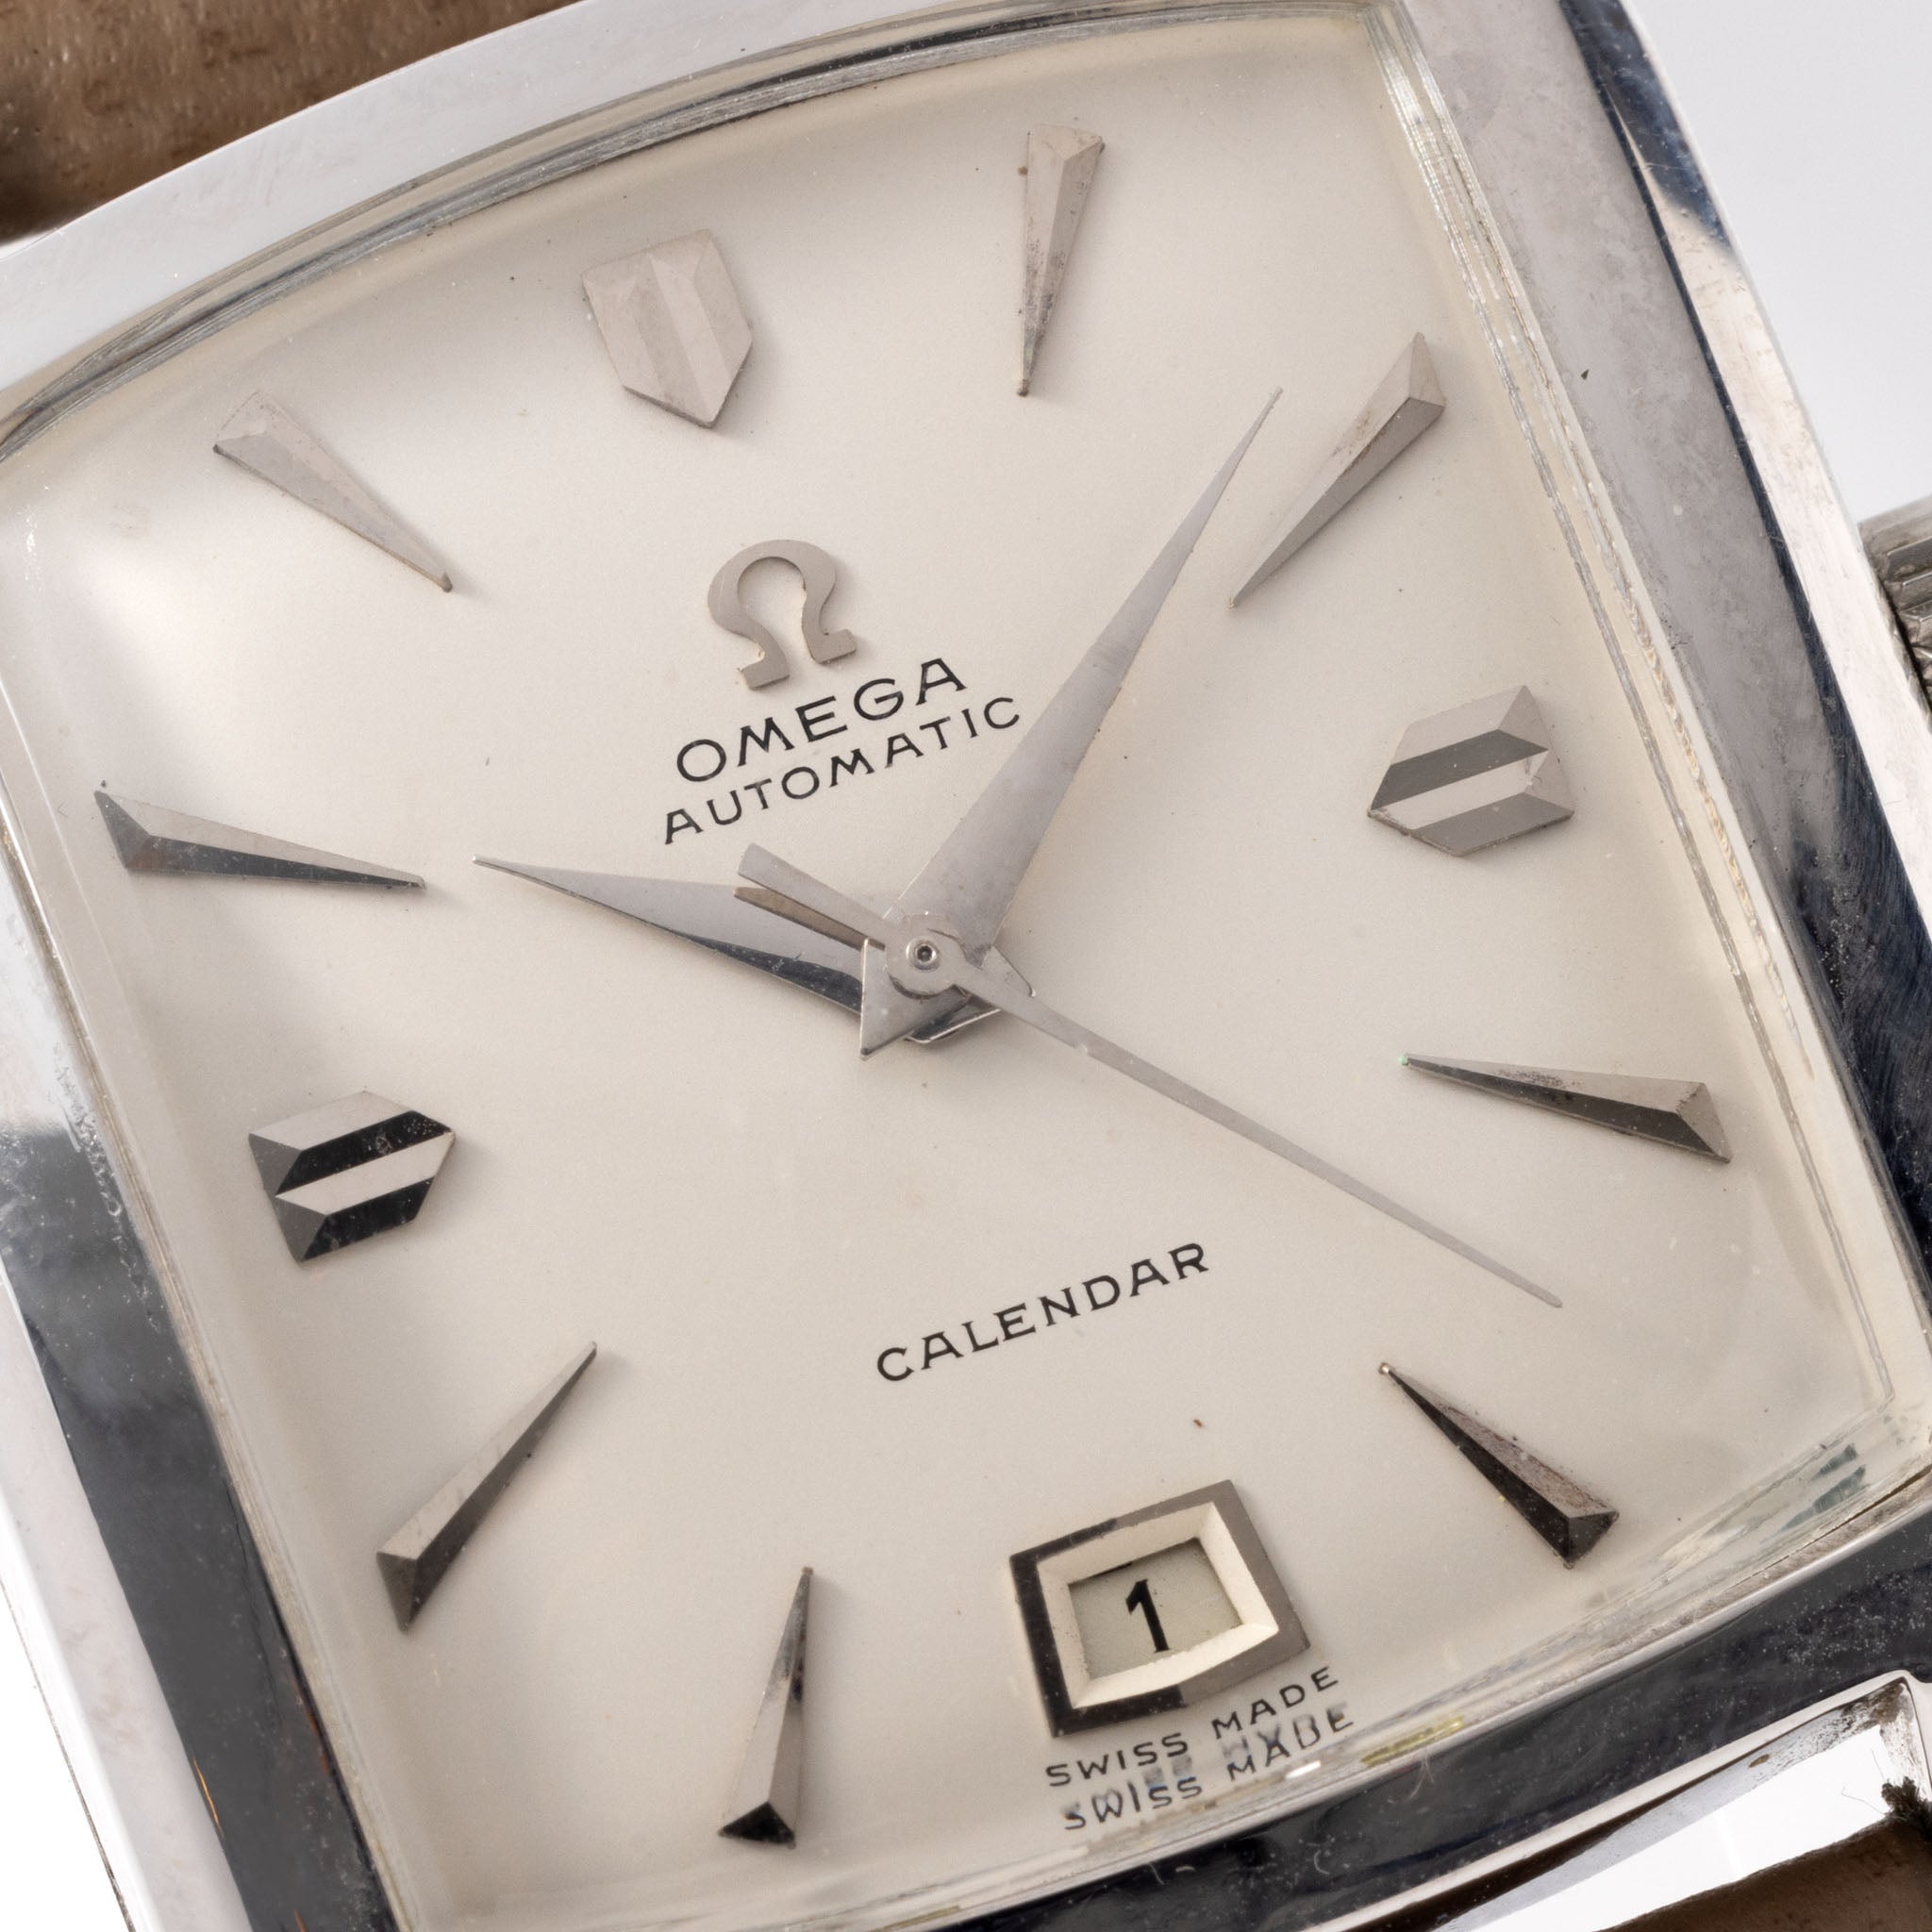 Omega Rare Calendar "Grand Luxe" White Gold Ref 3953